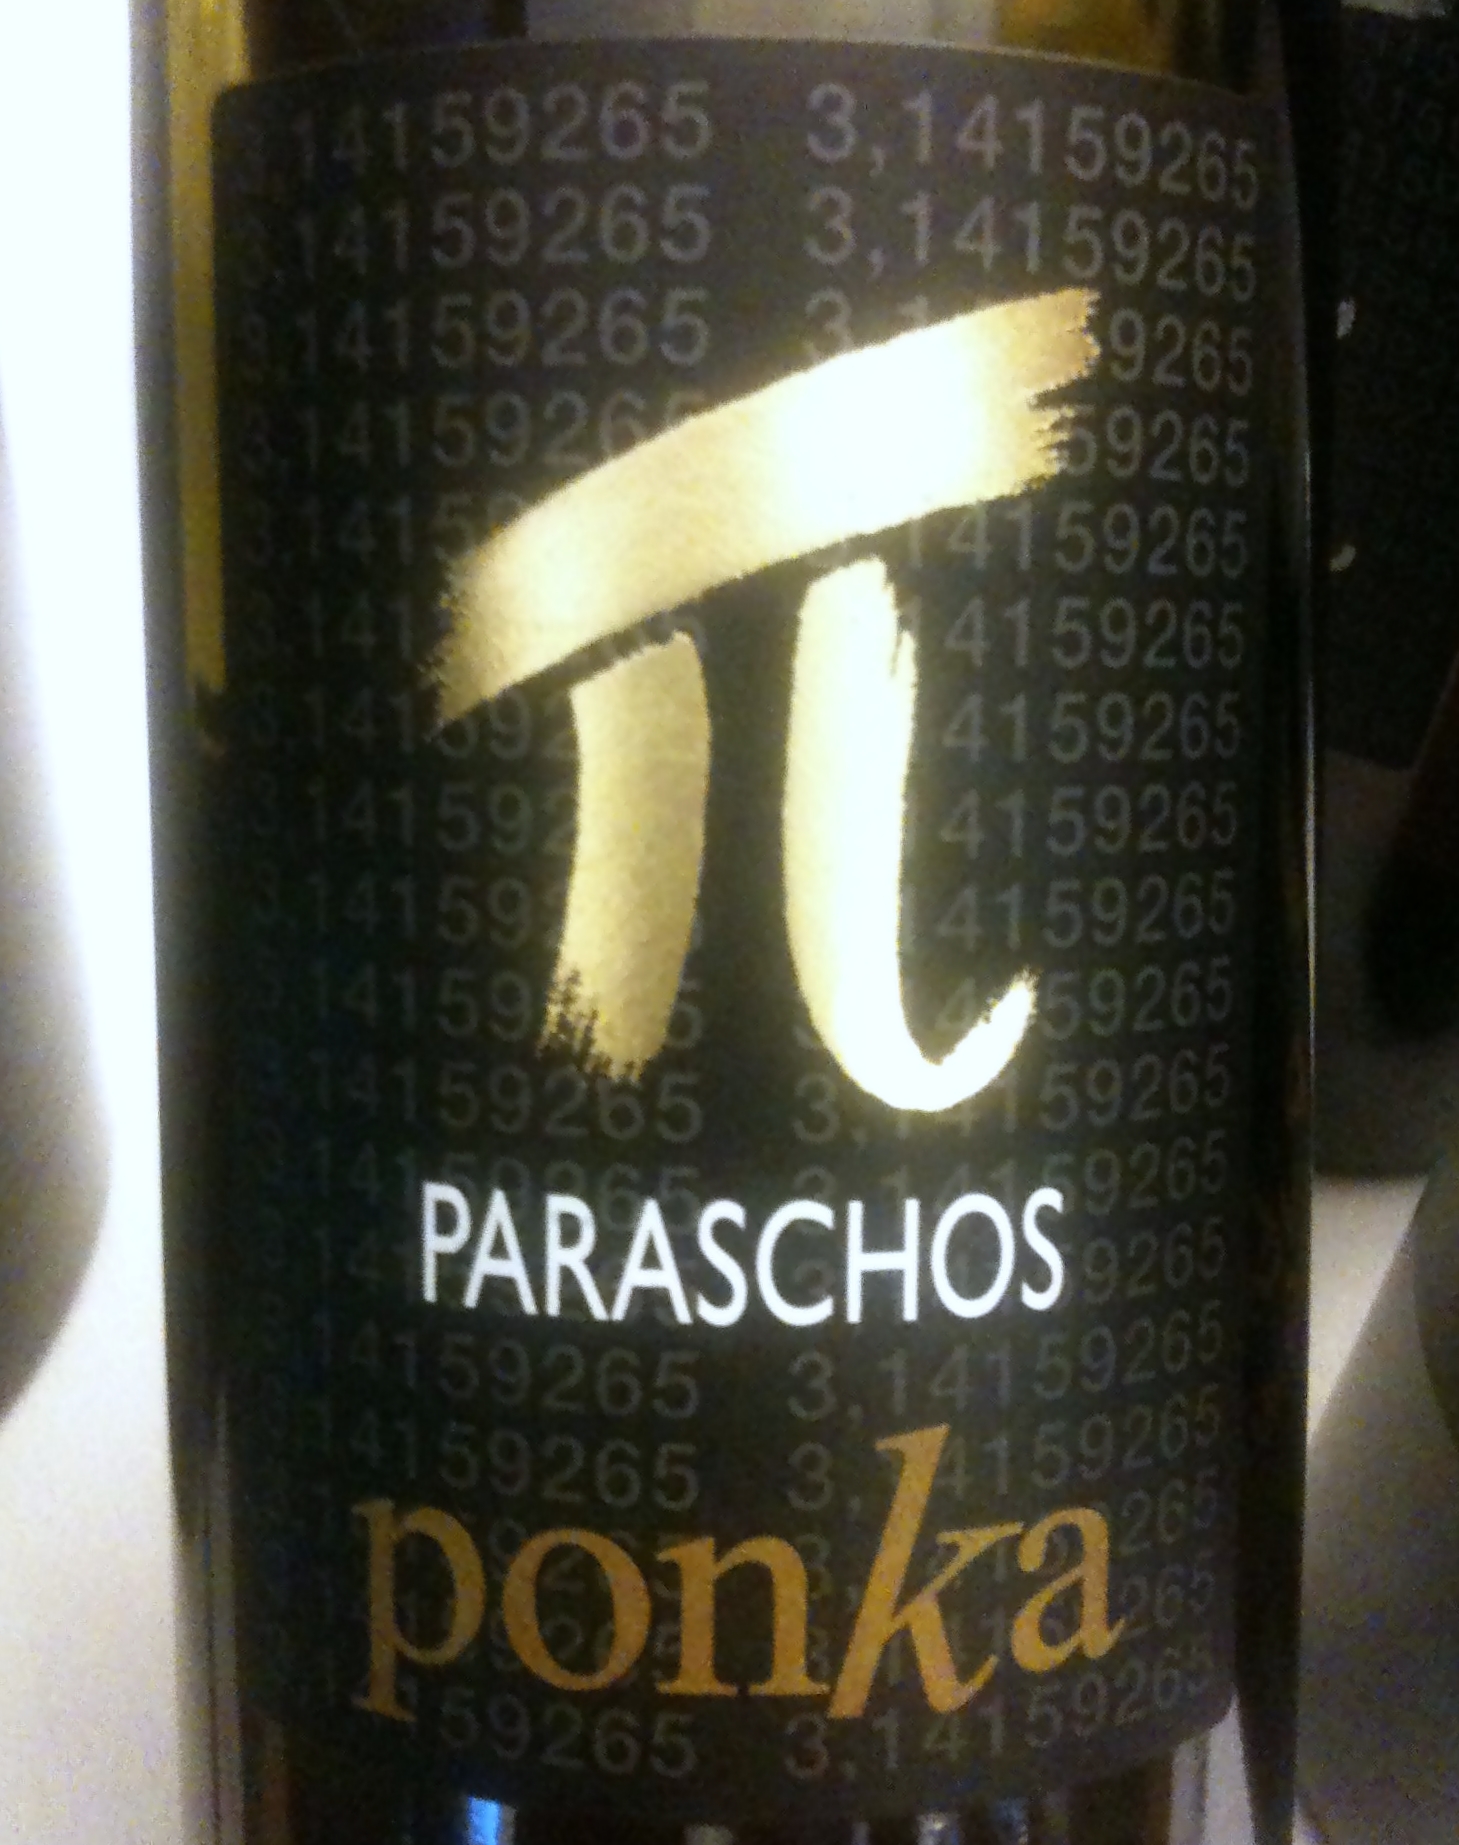 Paraschos Ponka